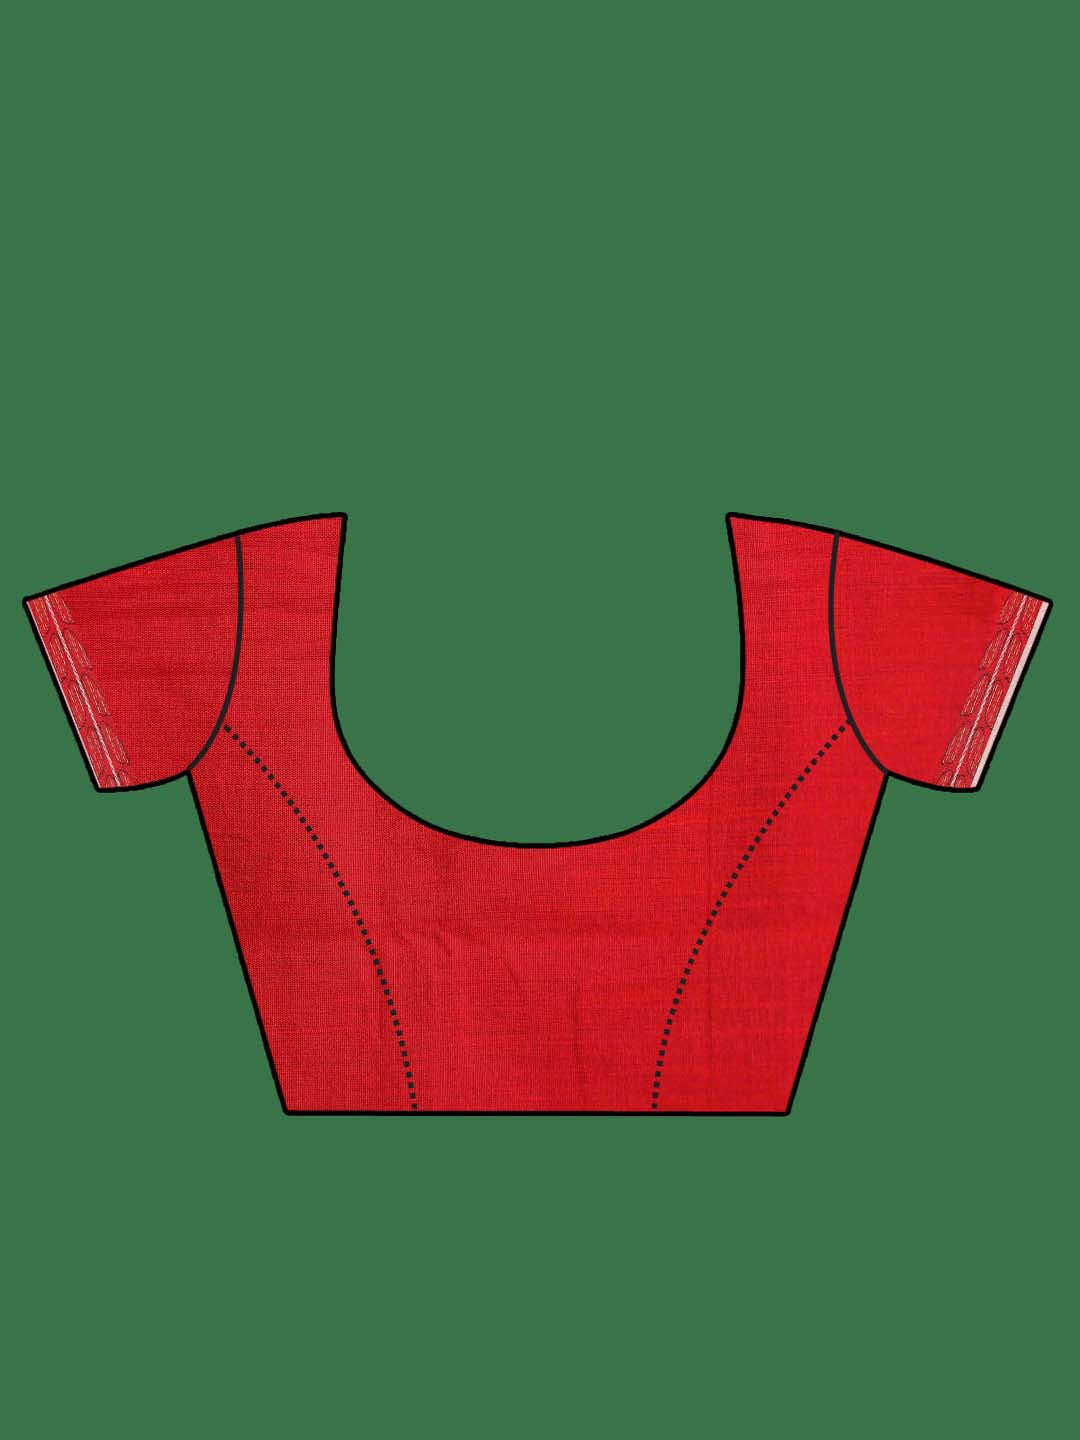 Indethnic Red Pure Cotton Ethnic Motifs Design Jamdani - Blouse Piece View